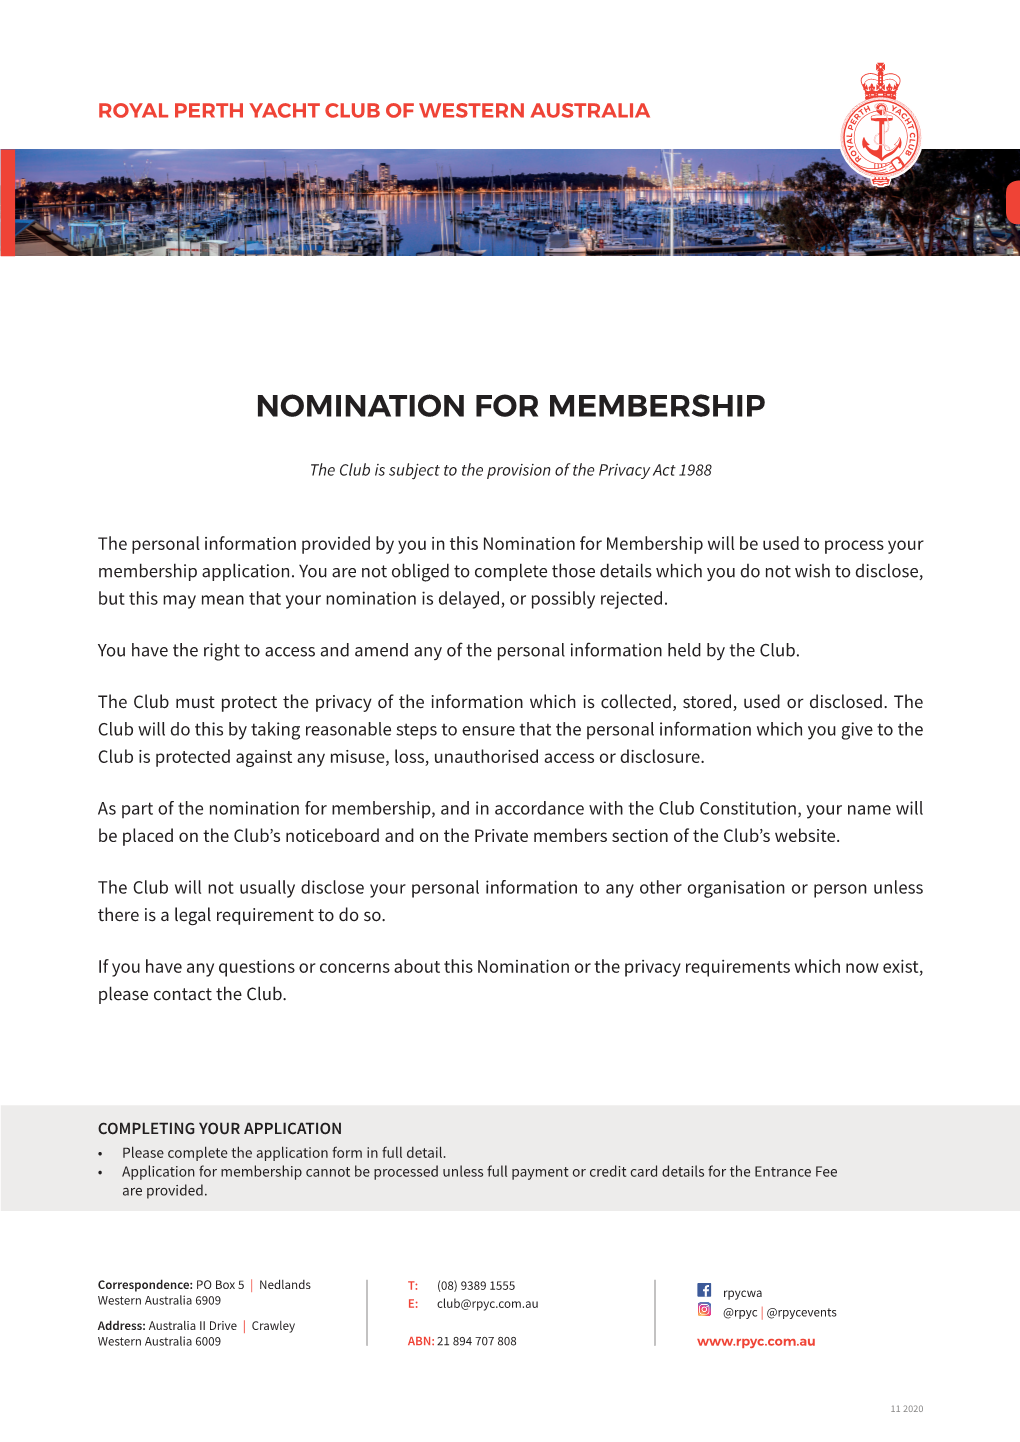 Nomination for Membership